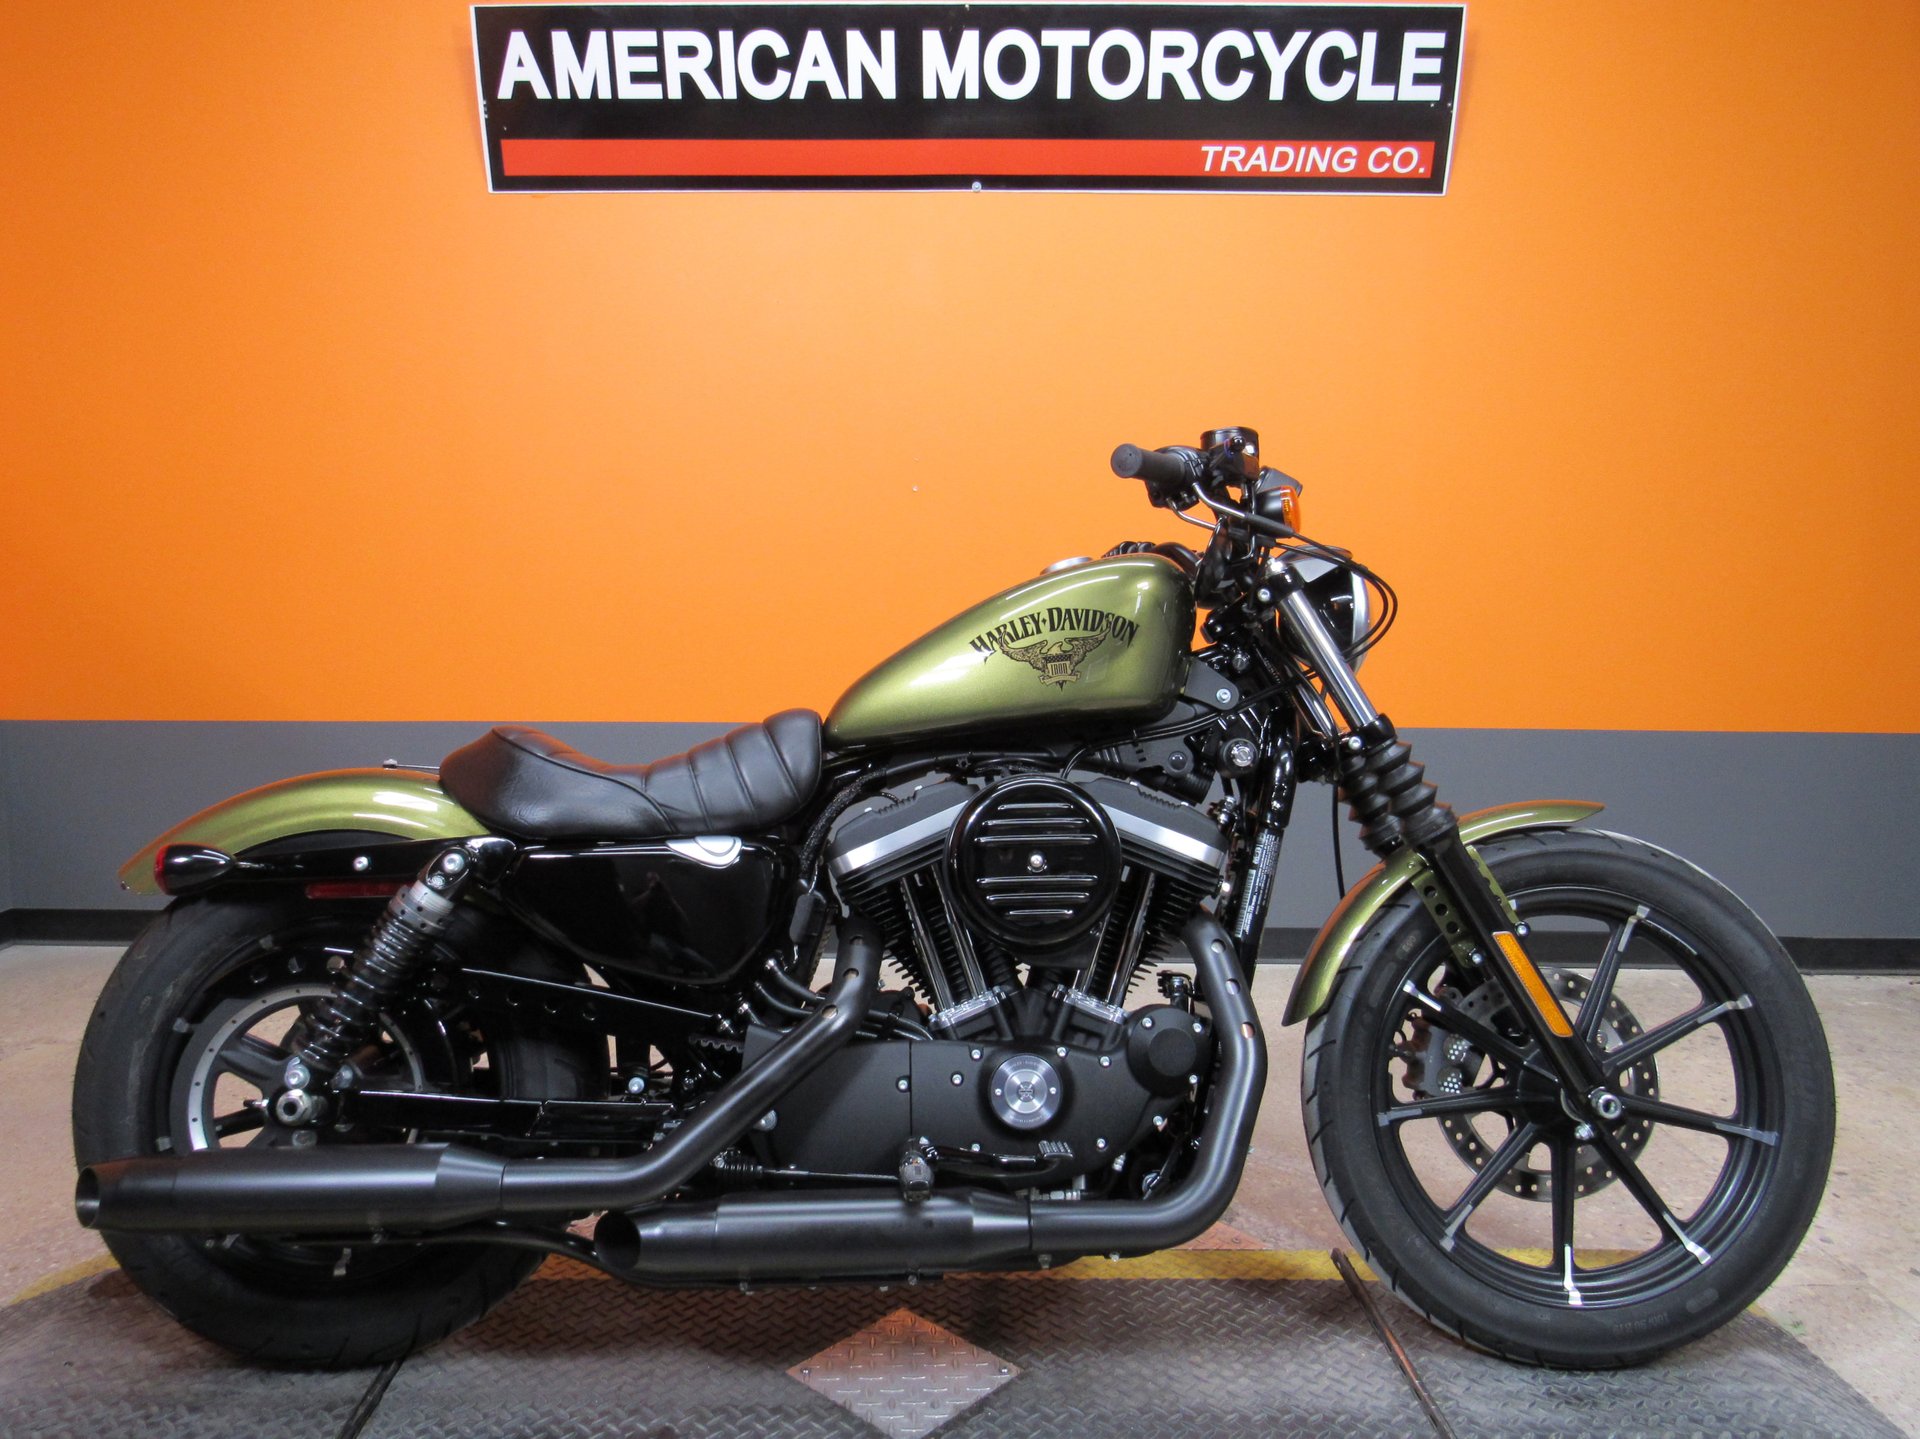 2016 Harley Davidson Sportster 883 American Motorcycle Trading Company Used Harley Davidson Motorcycles